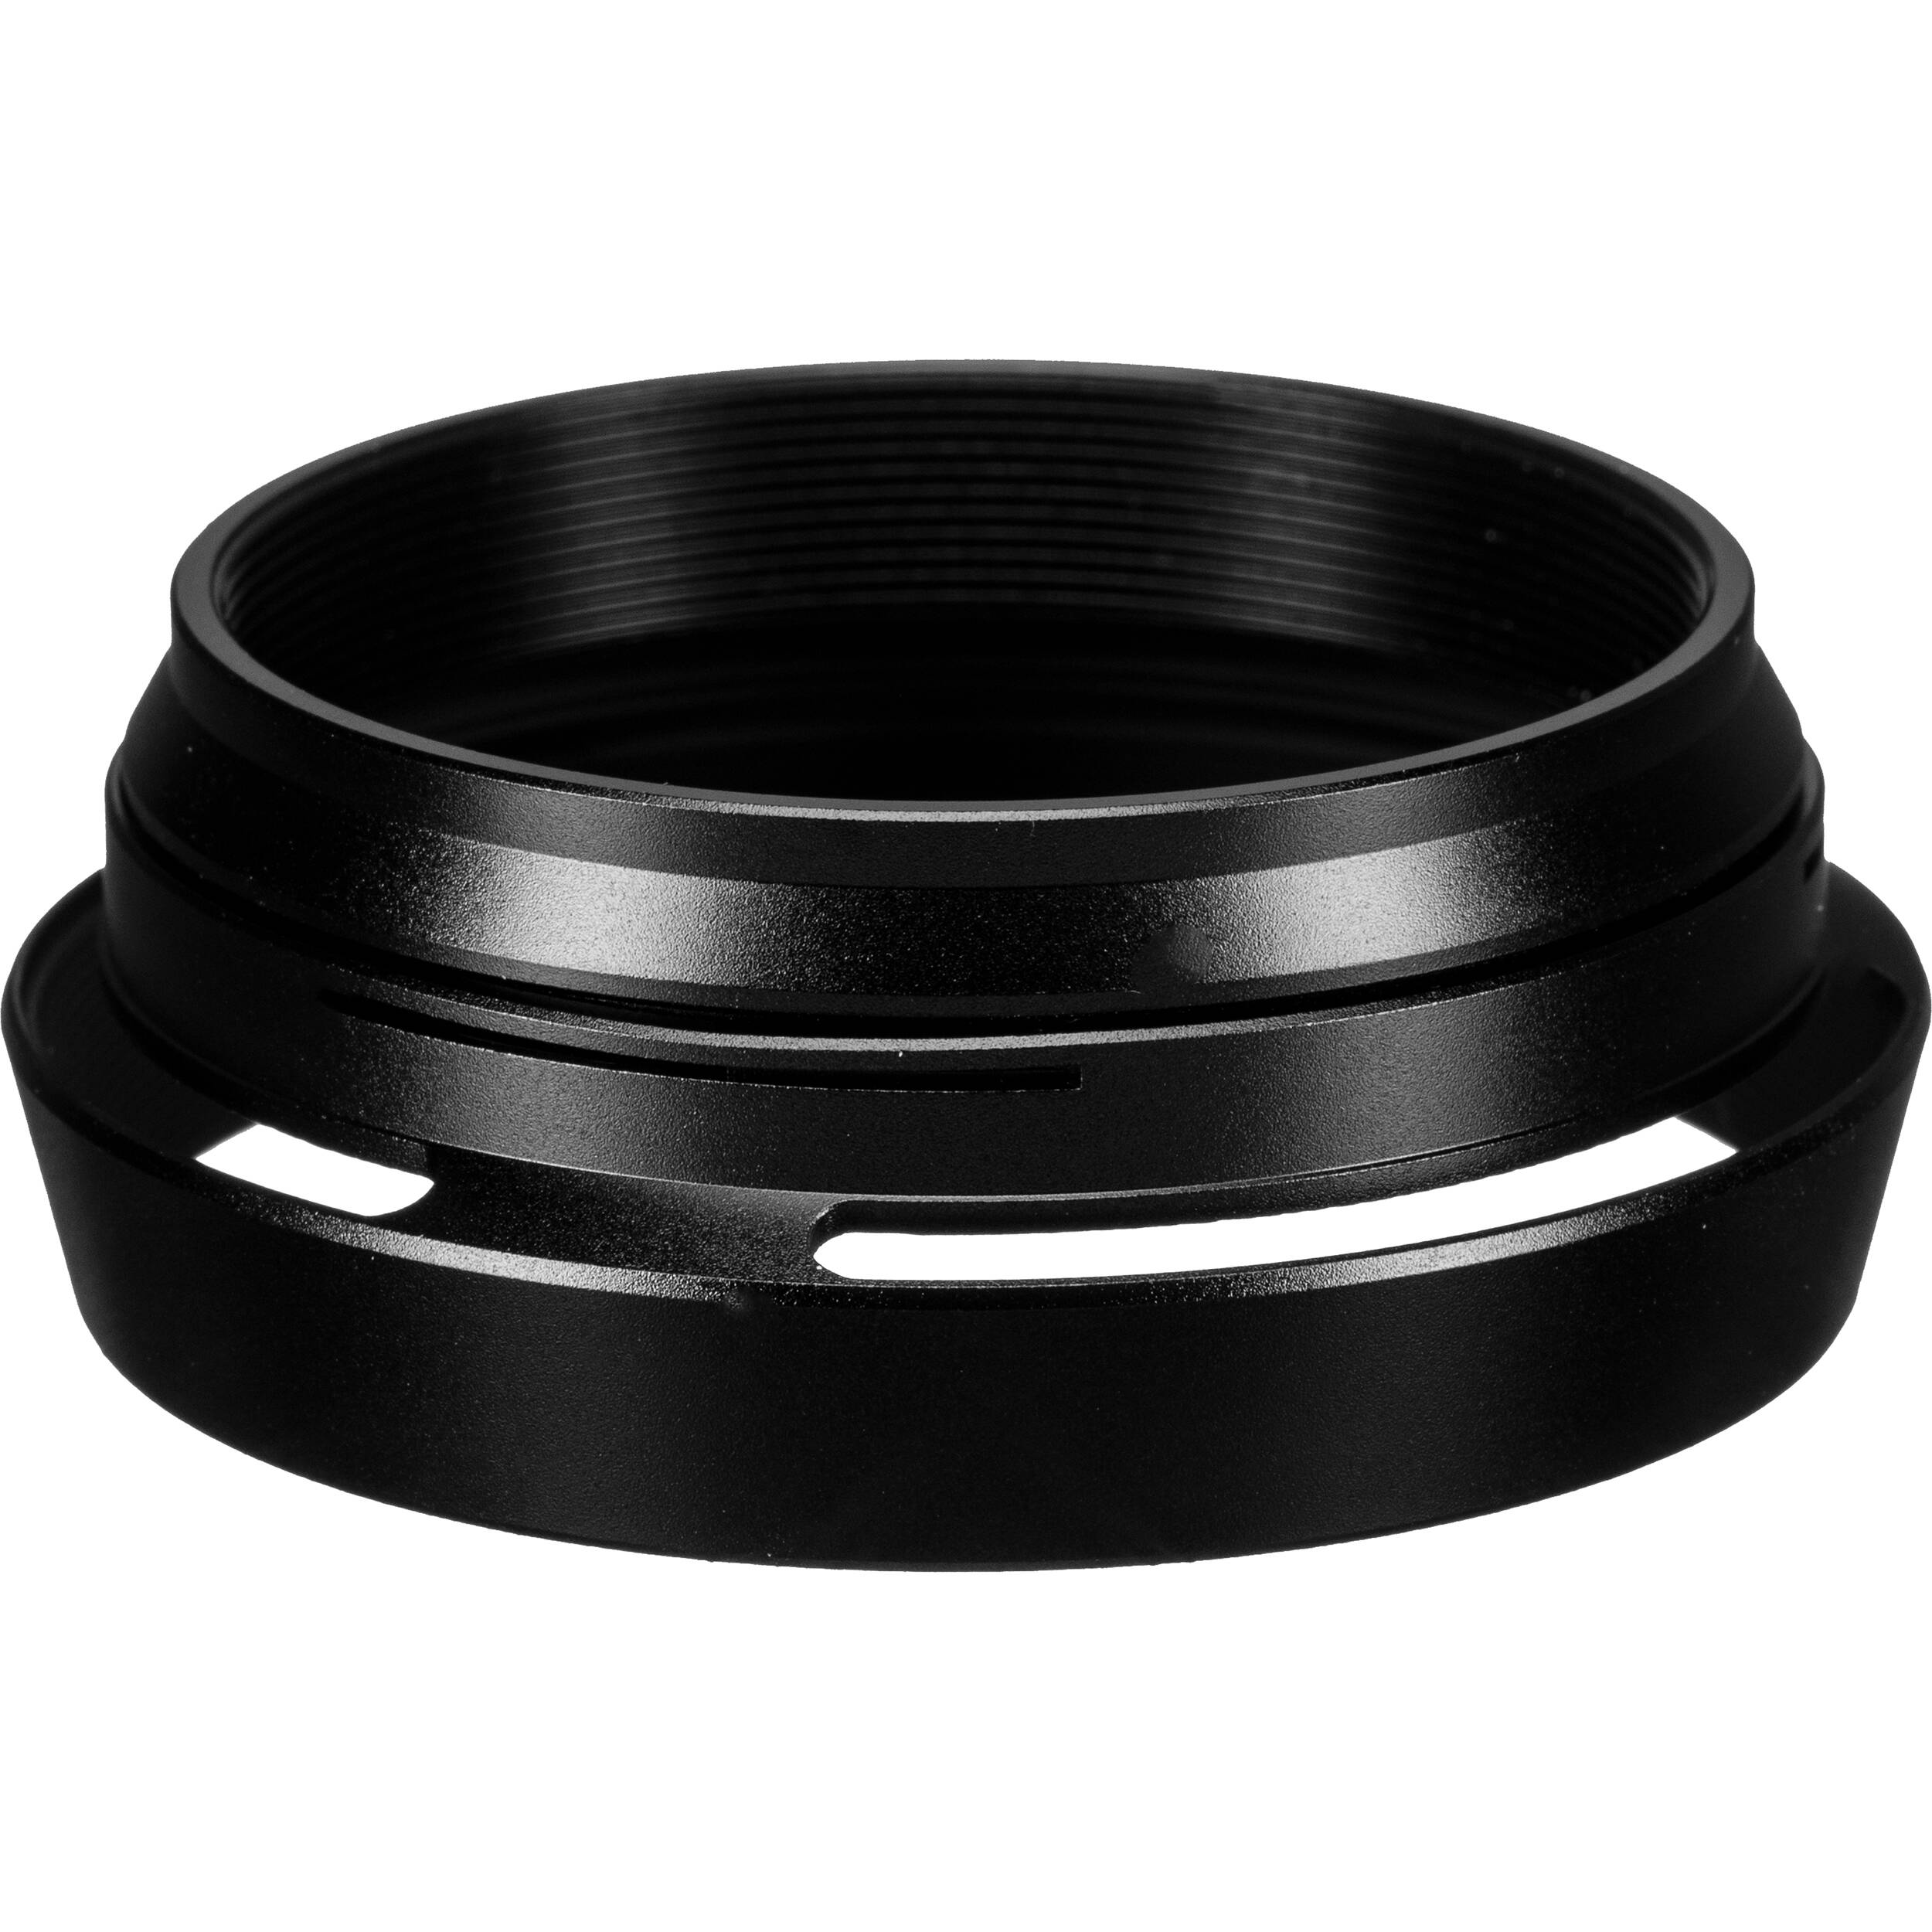 Fujifilm X100 Lens Hood + Adapter Ring ARX100 - Black